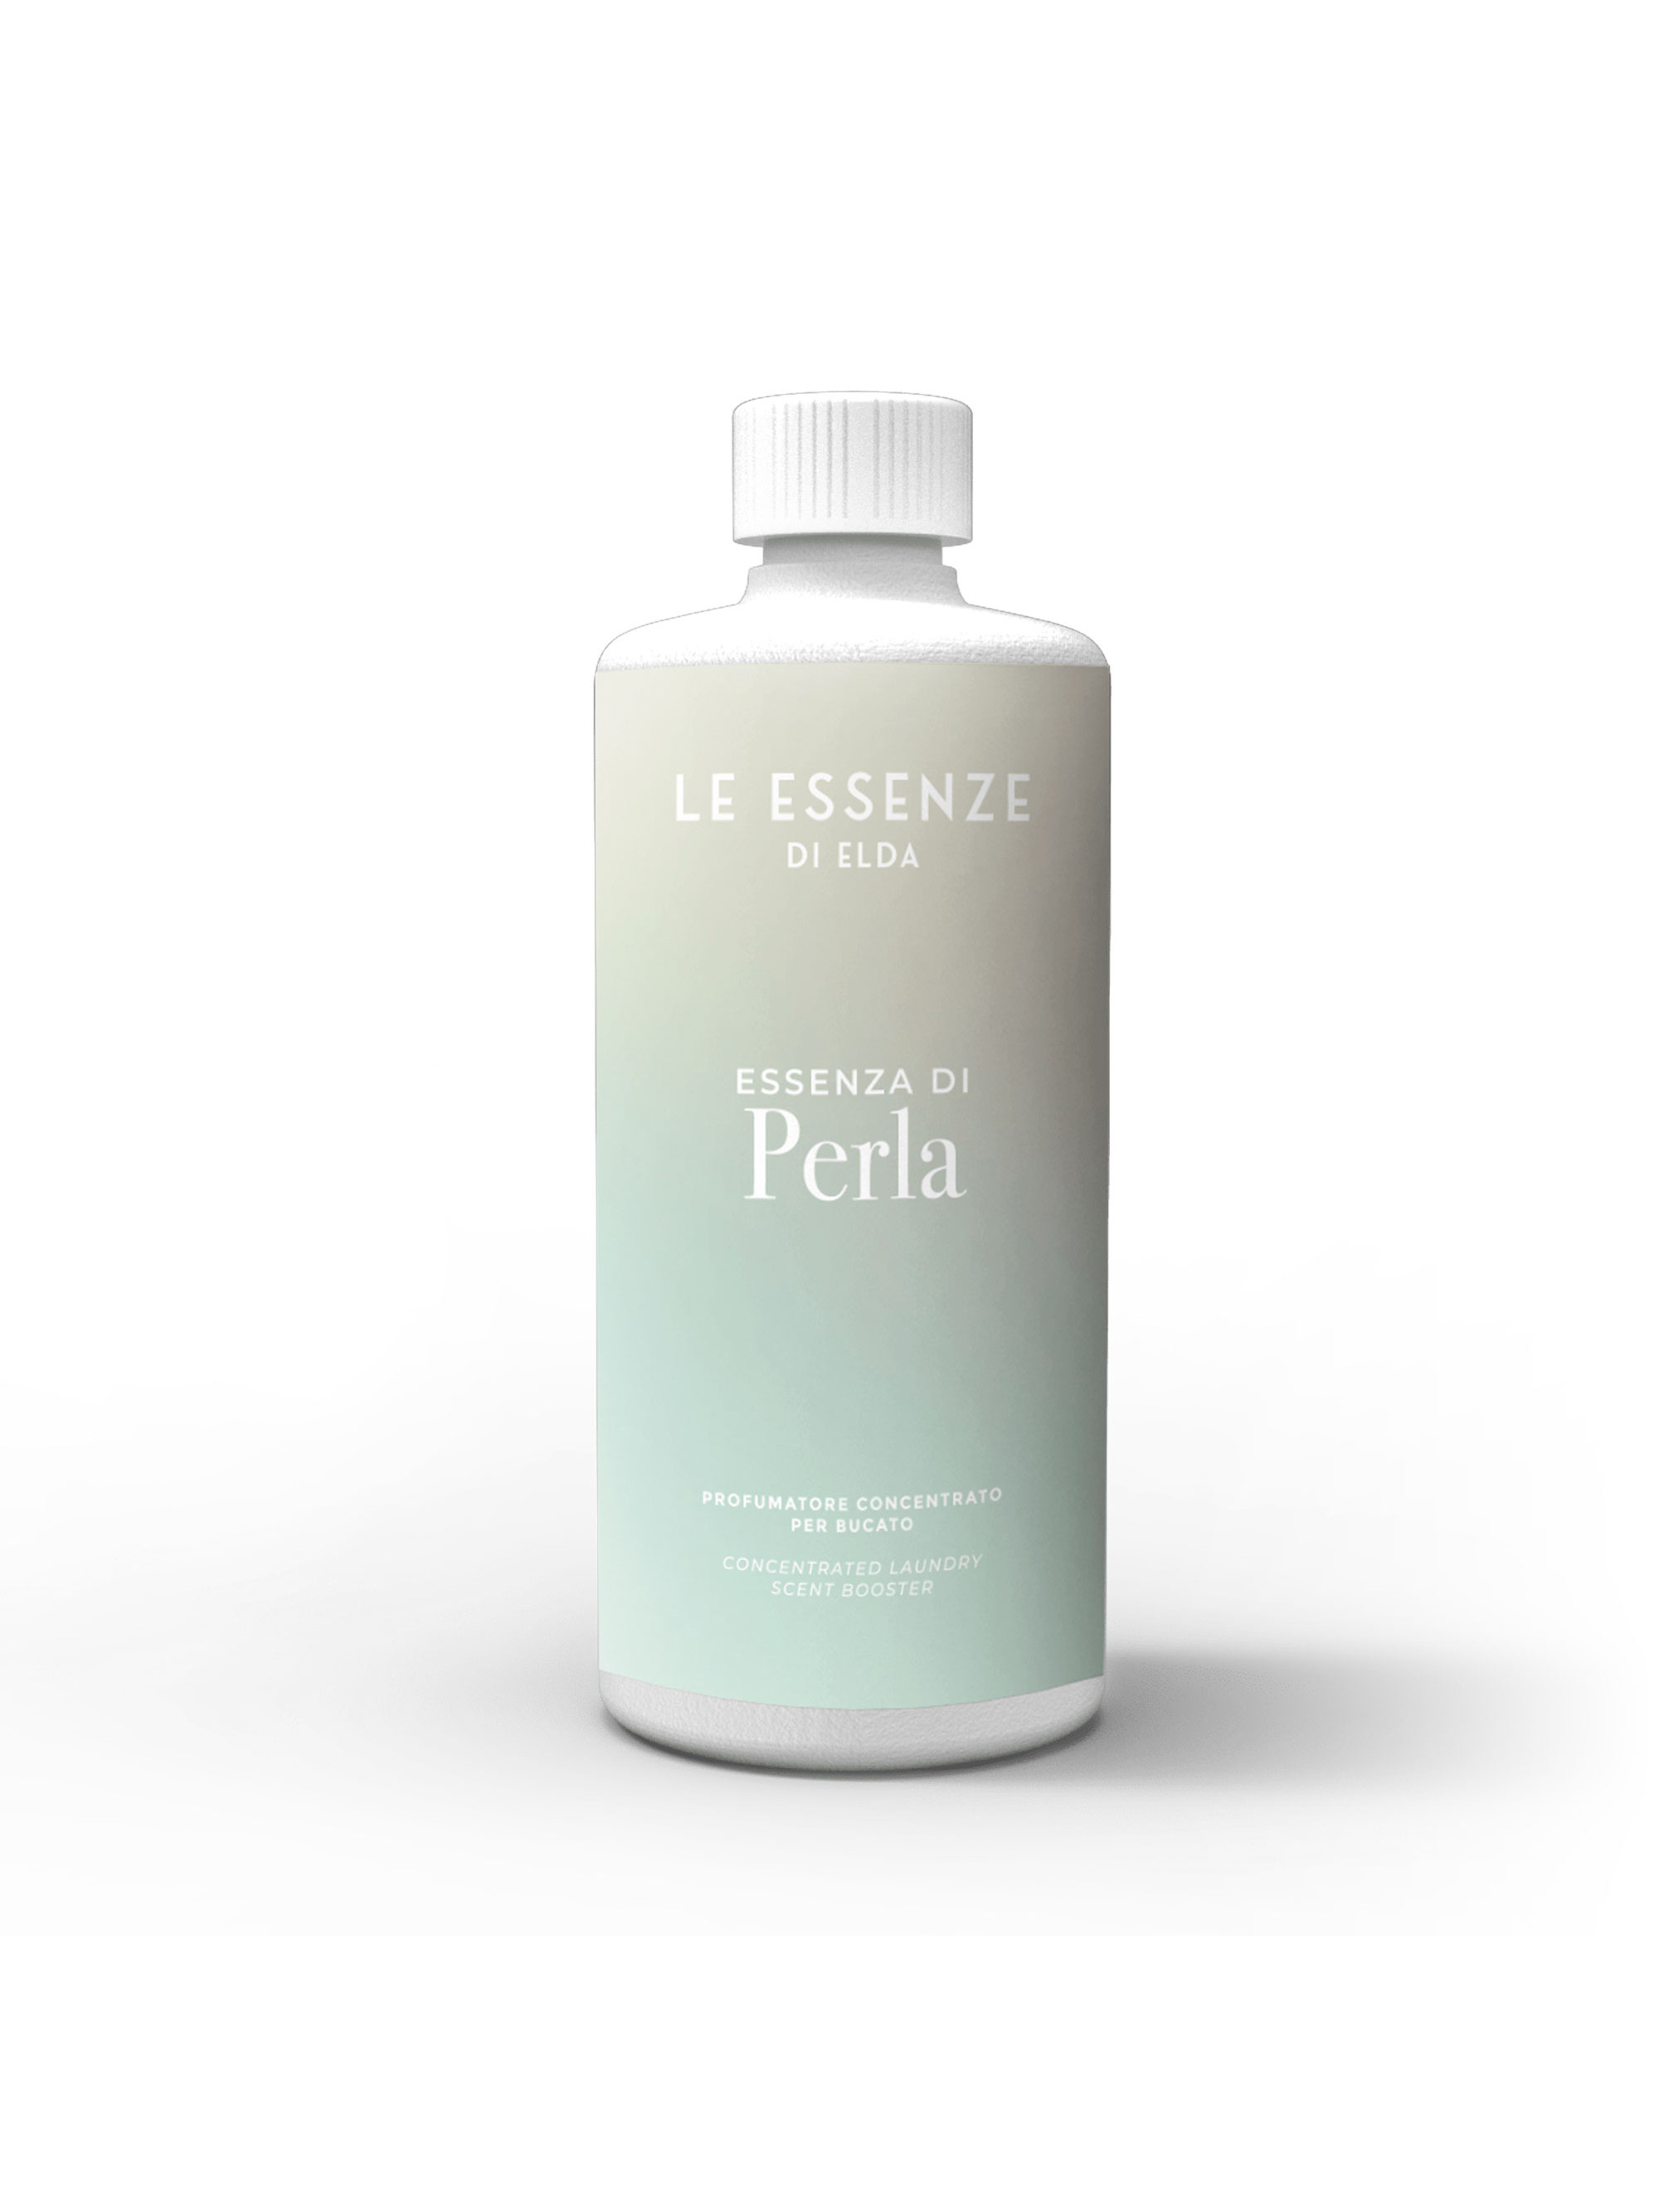 Essenza Perla - 500 ml laundry perfumer